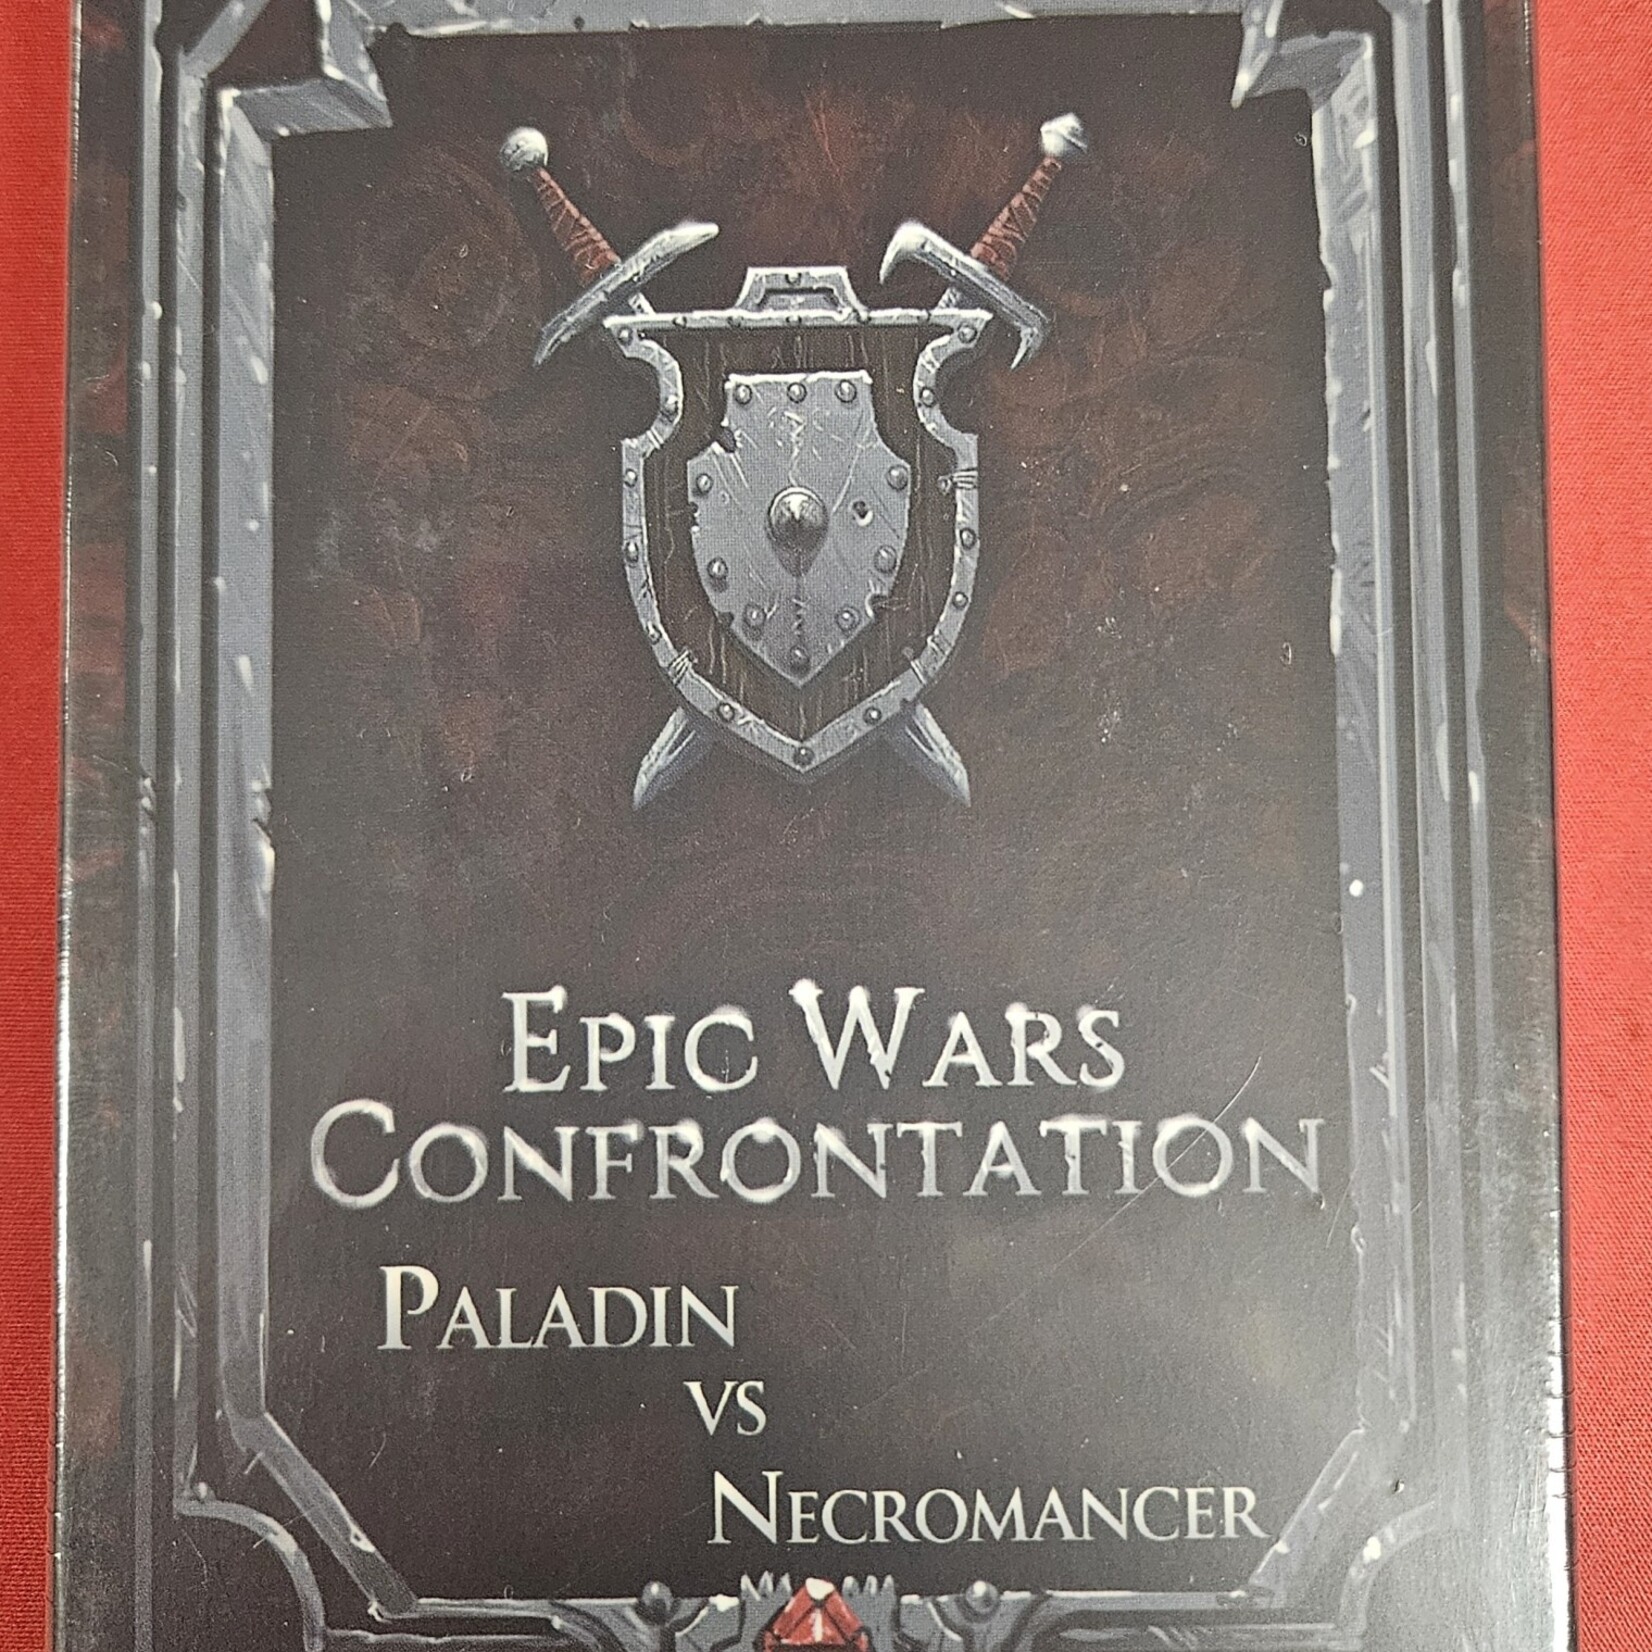 Epic Wars Confrontation Epic Wars Confrontation - Paladin vs Necromancer